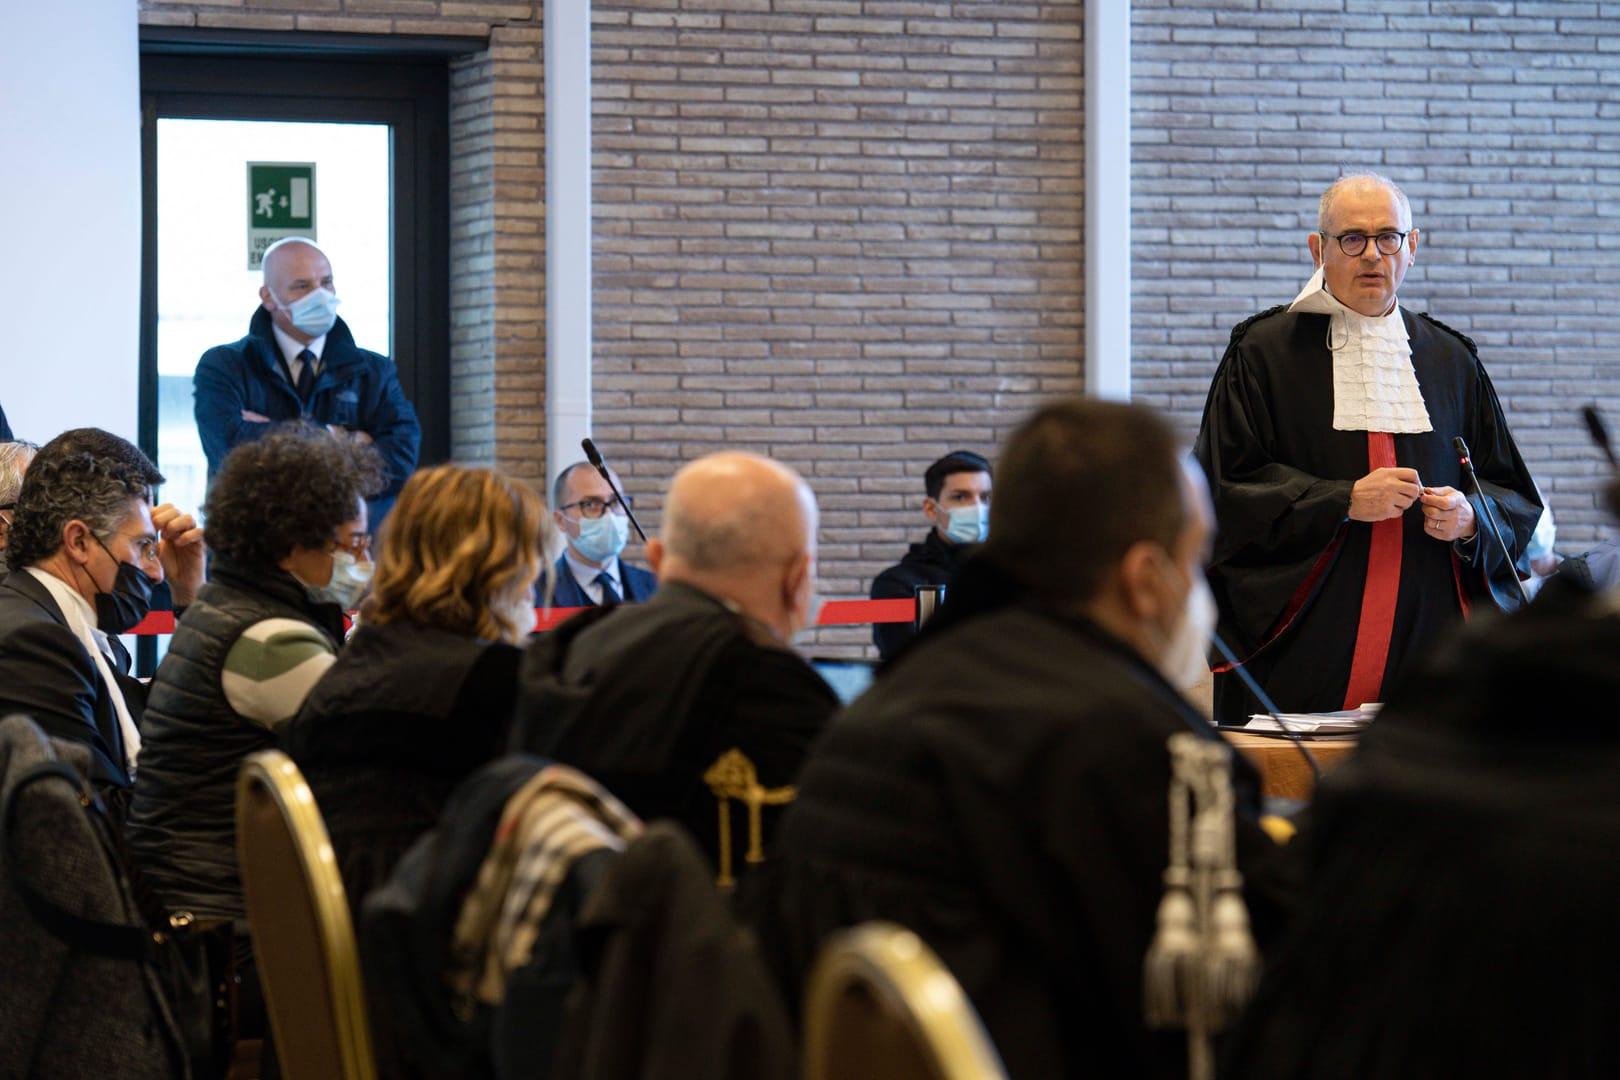 Despite setbacks, Vatican editorial defends trial procedures